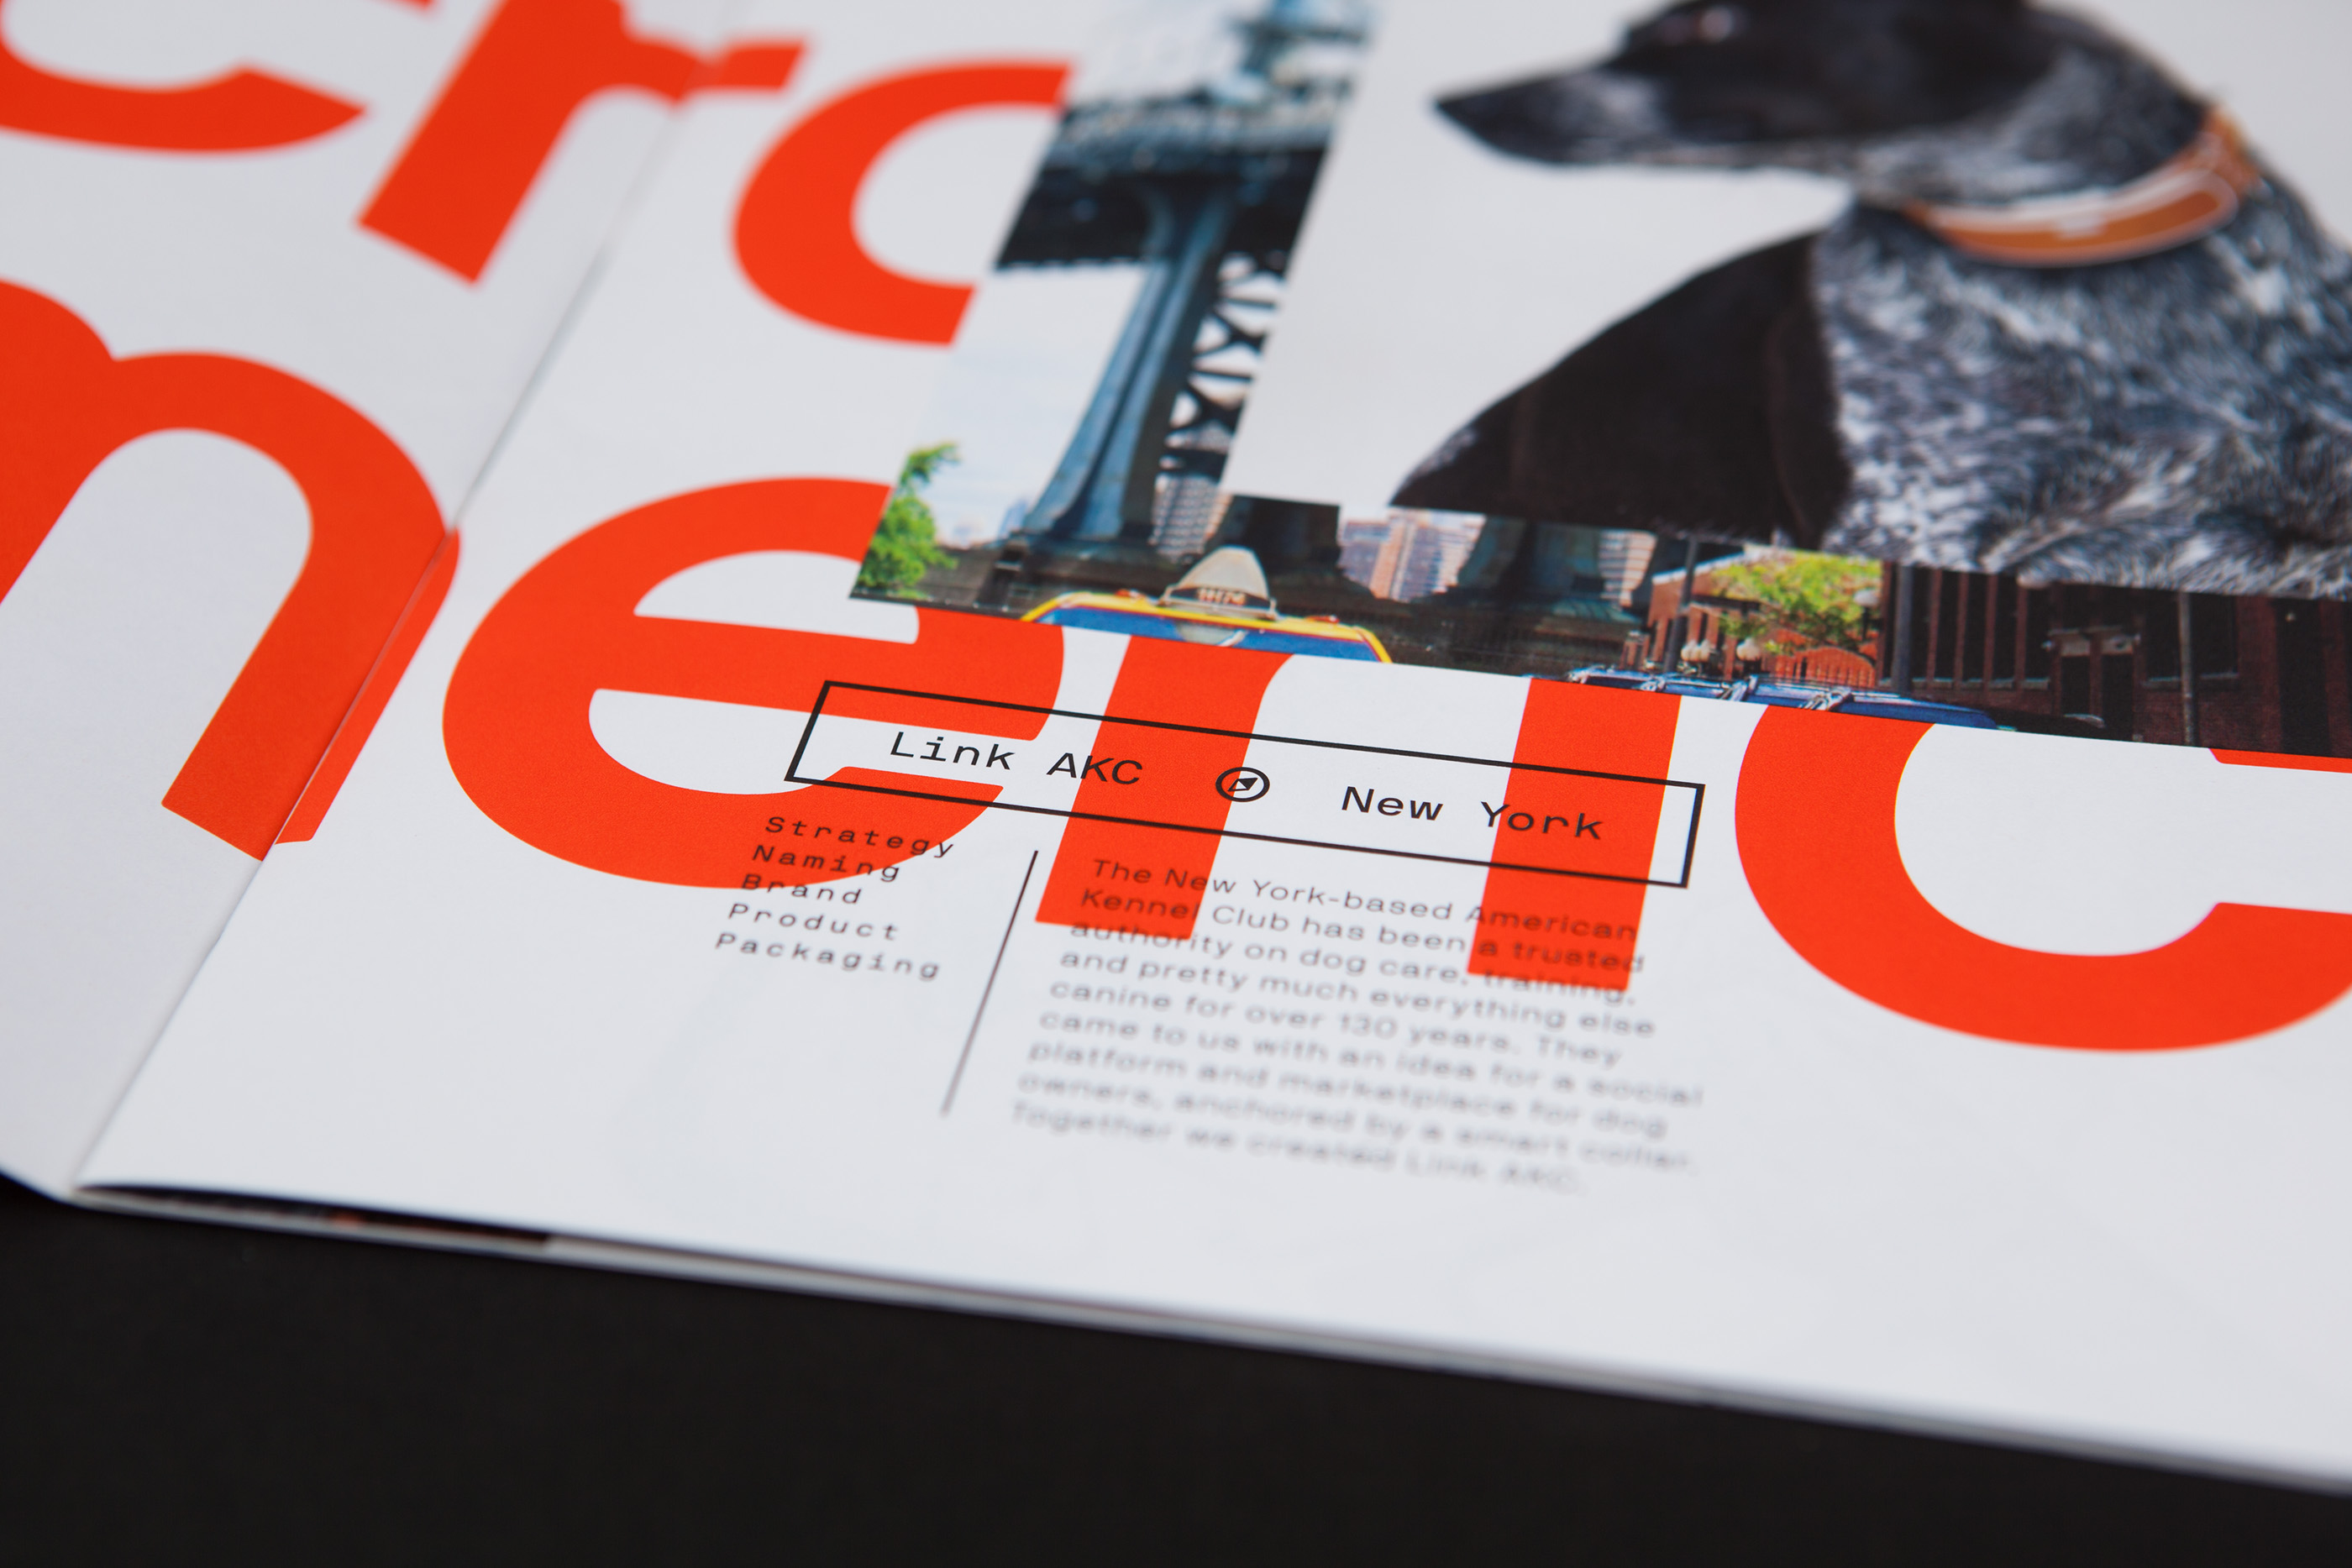 Brochure design idea #11: That 90s Look is Coming Back - Design Across America Brochure